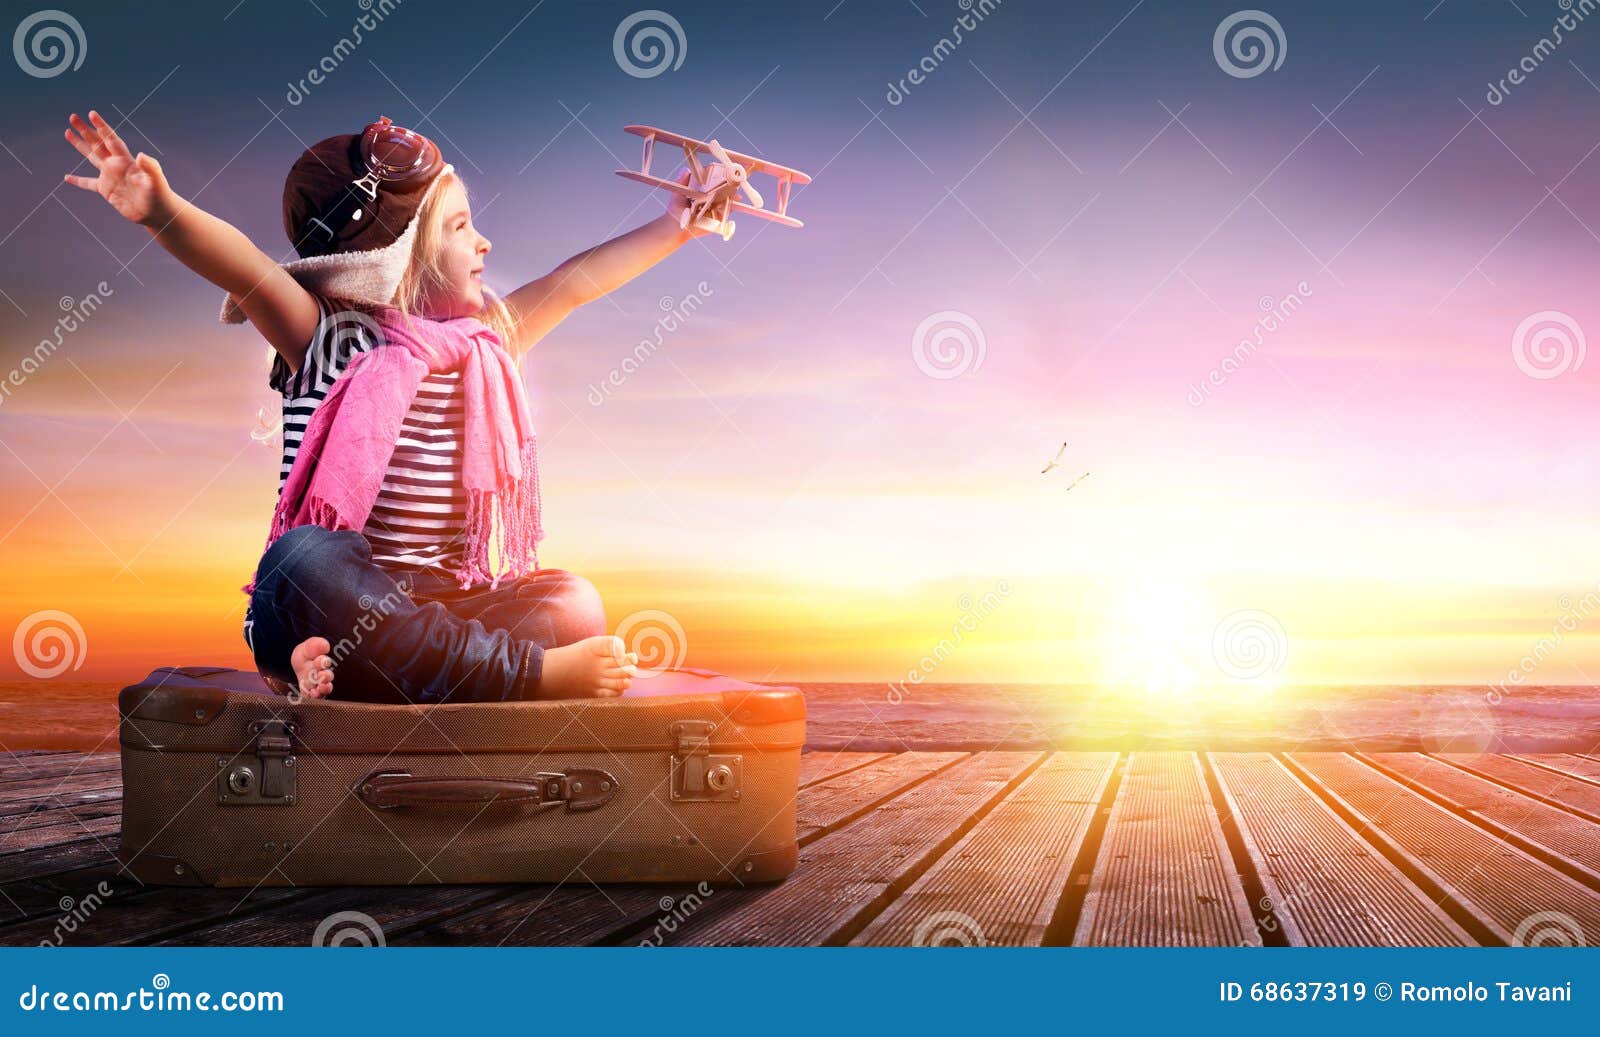 dream journey - little girl on vintage suitcase